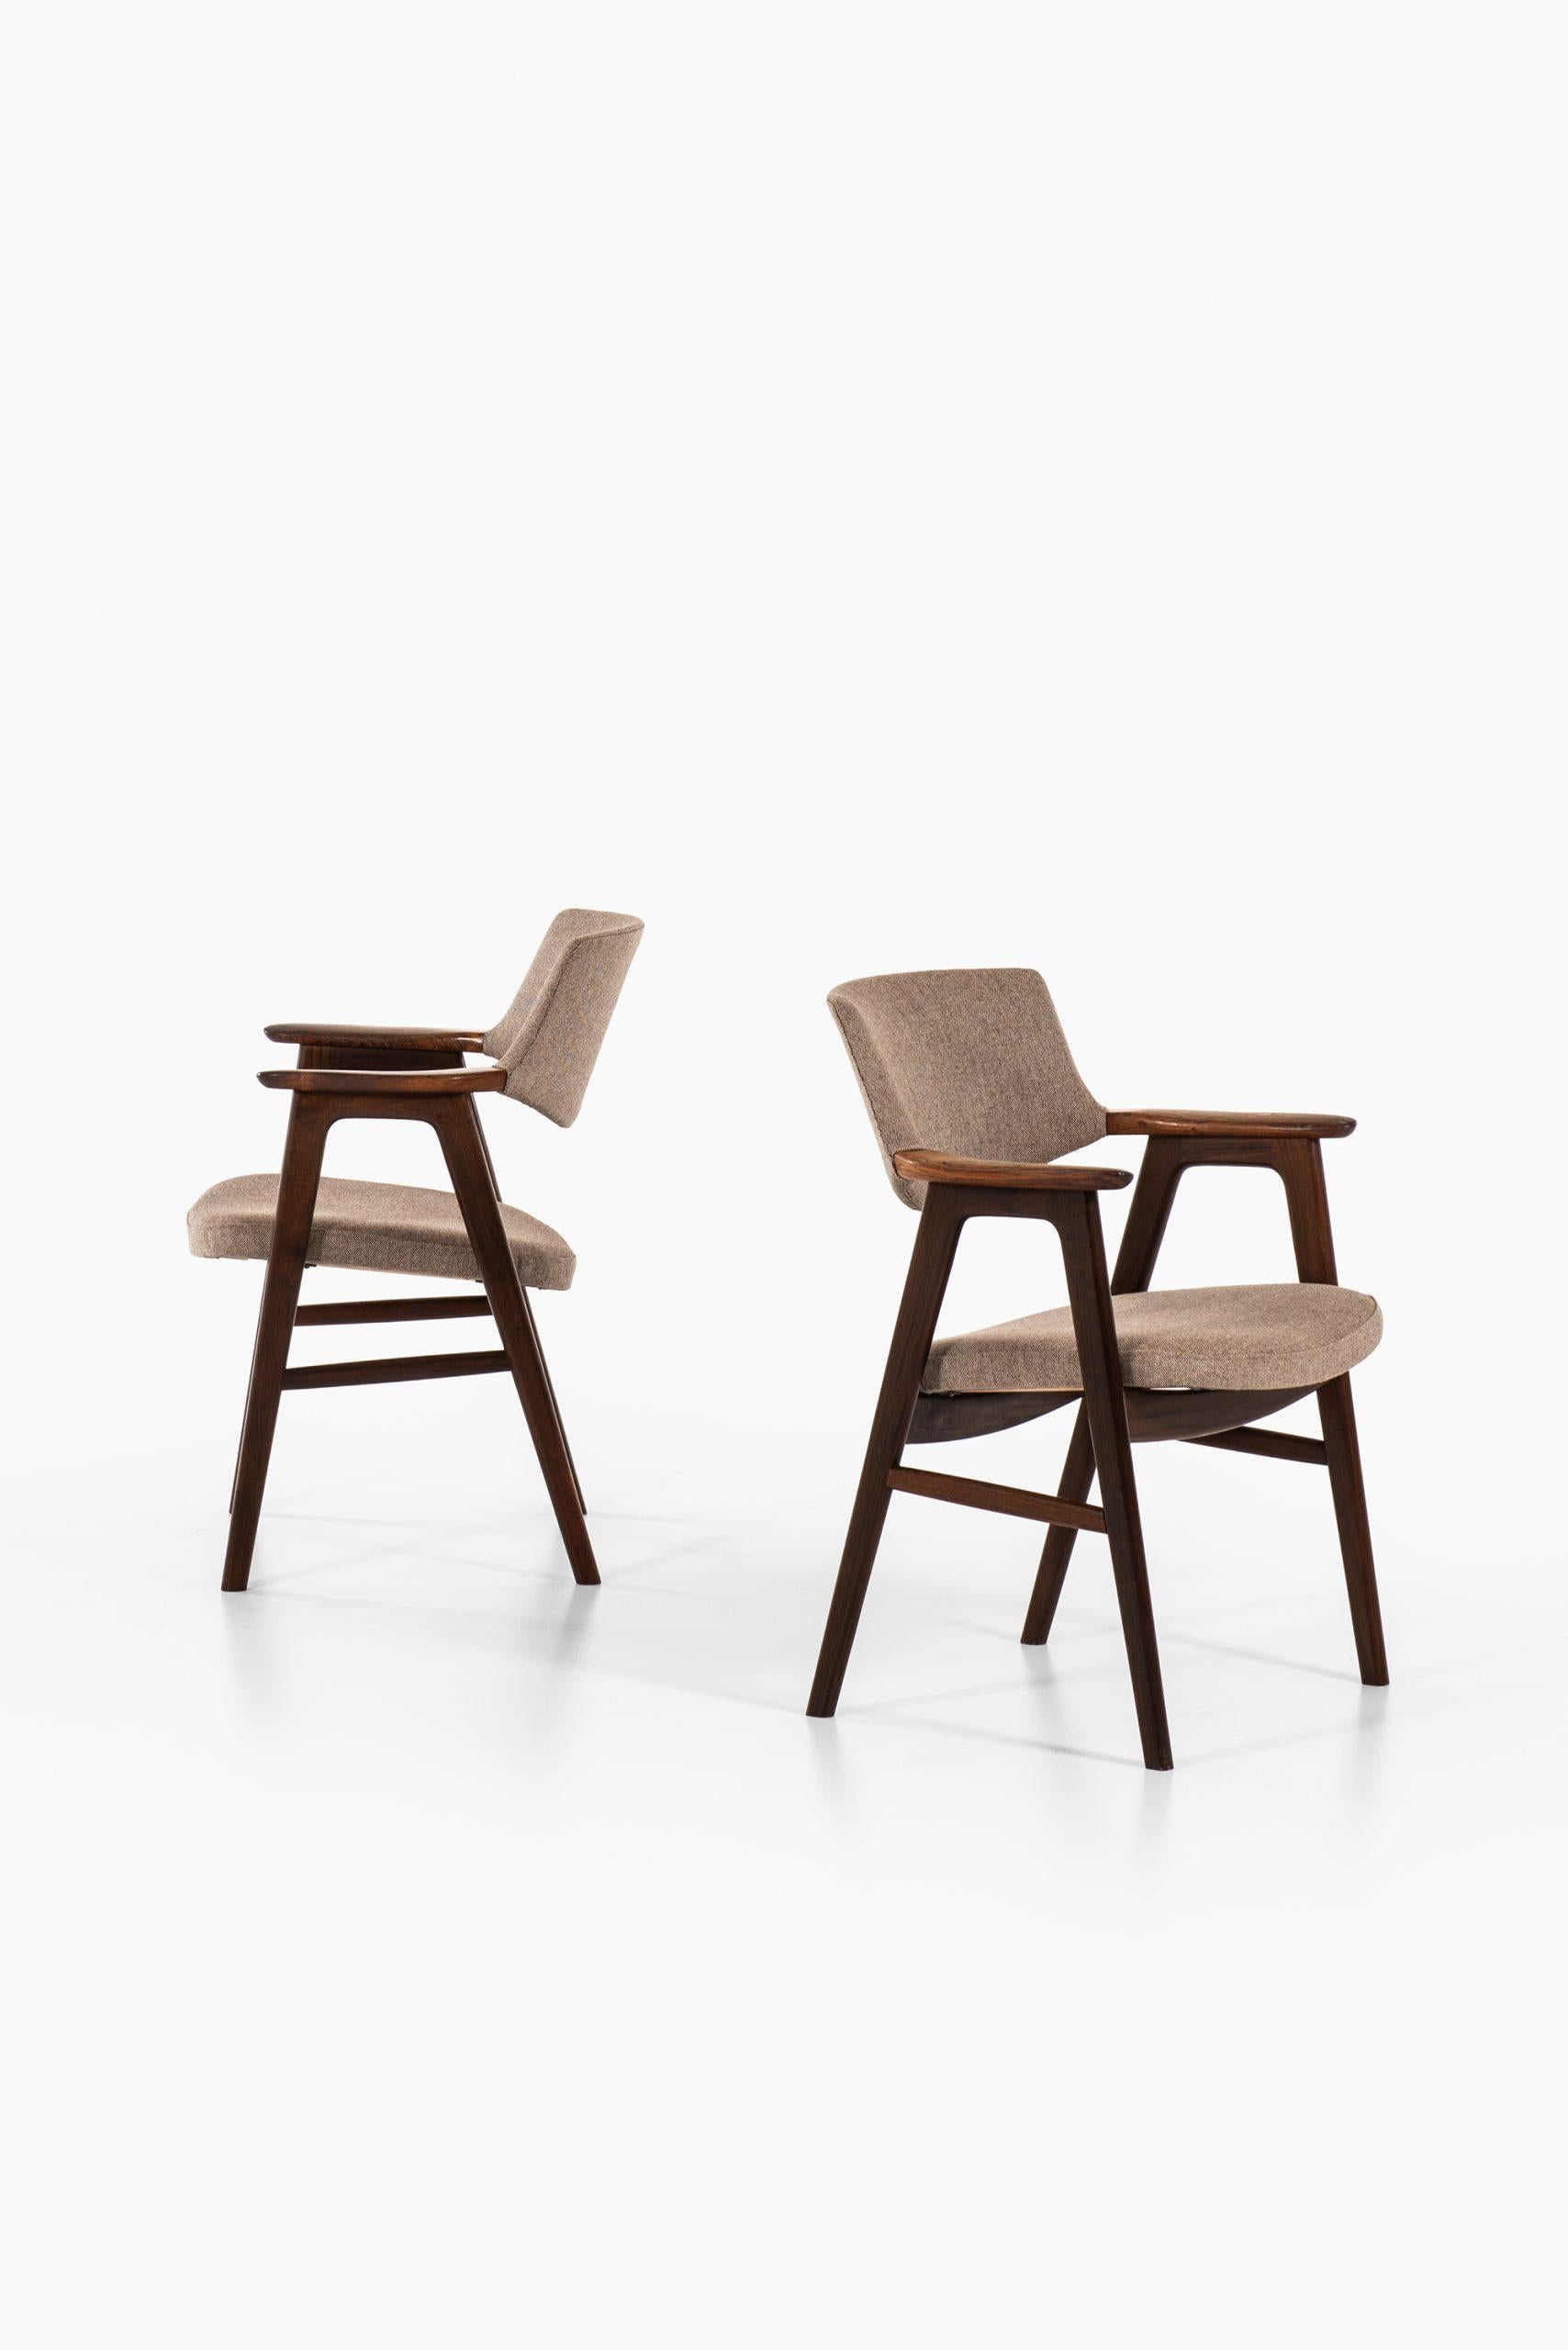 Fabric Erik Kirkegaard Armchairs / Dining Chairs by Høng Stolefabrik in Denmark For Sale